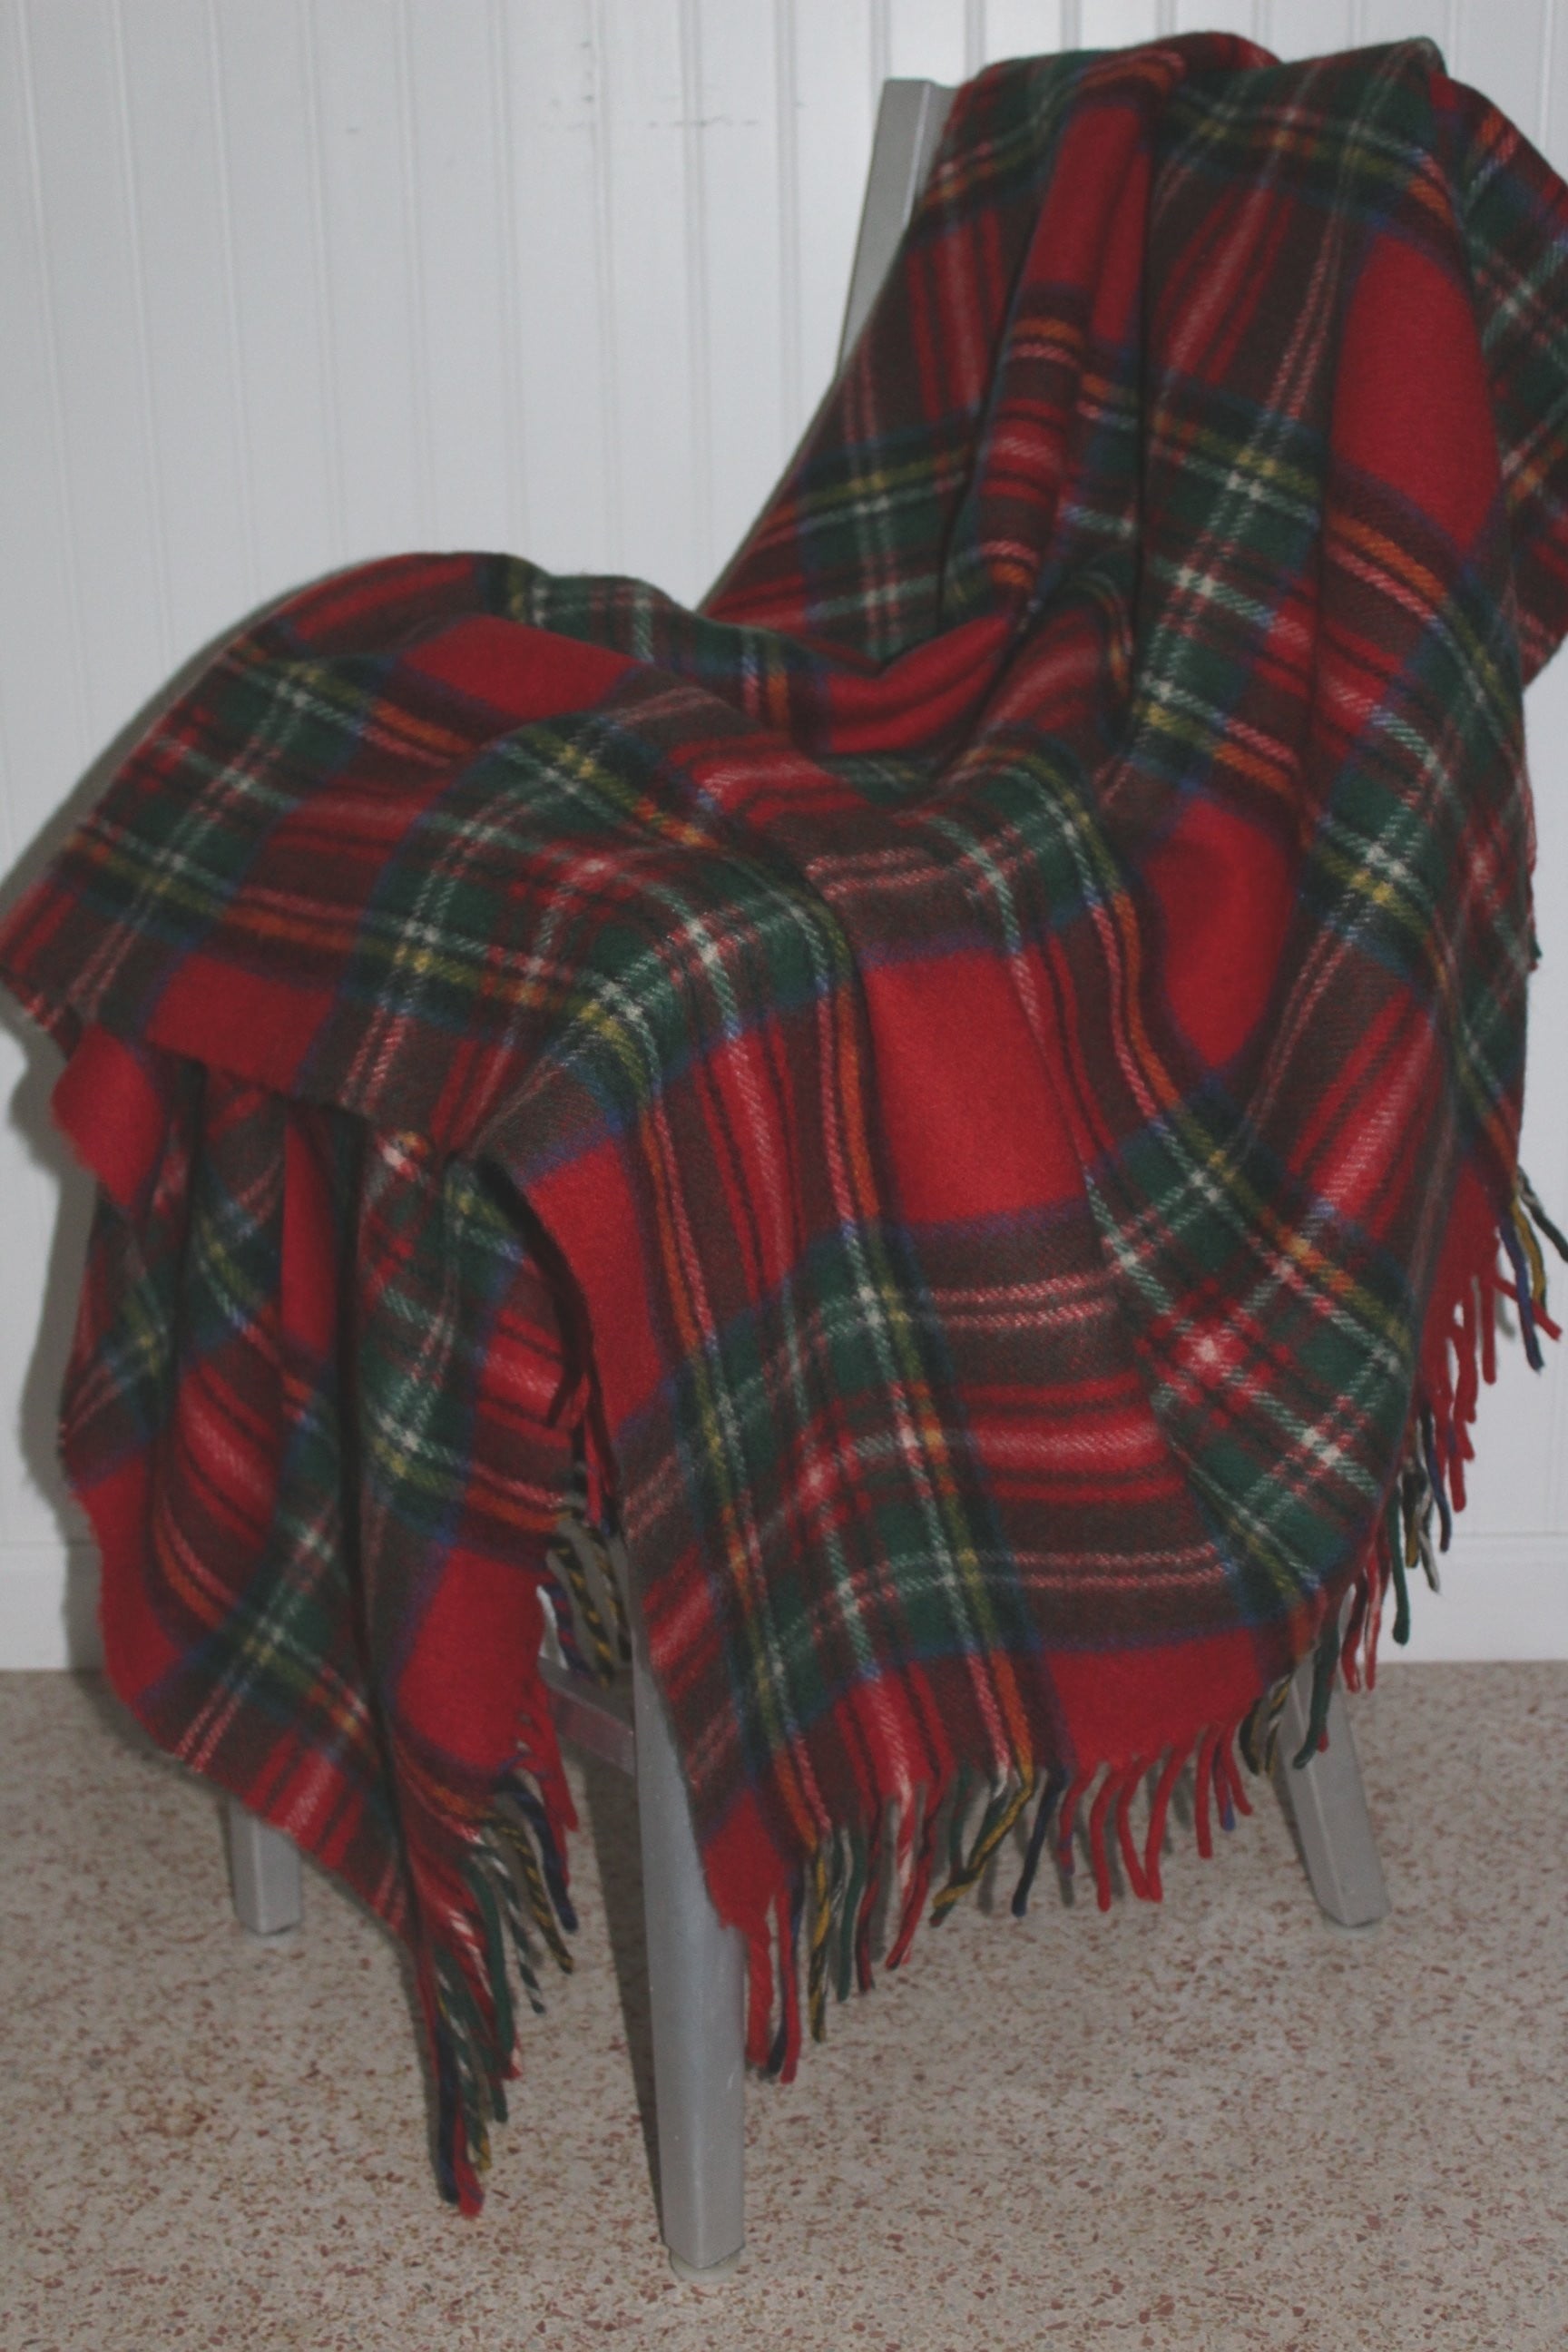 Horner Wool Fringed Throw 51" X 63" Red Tartan Plaid Heavy Soft Nap Excellent 1950s blanket